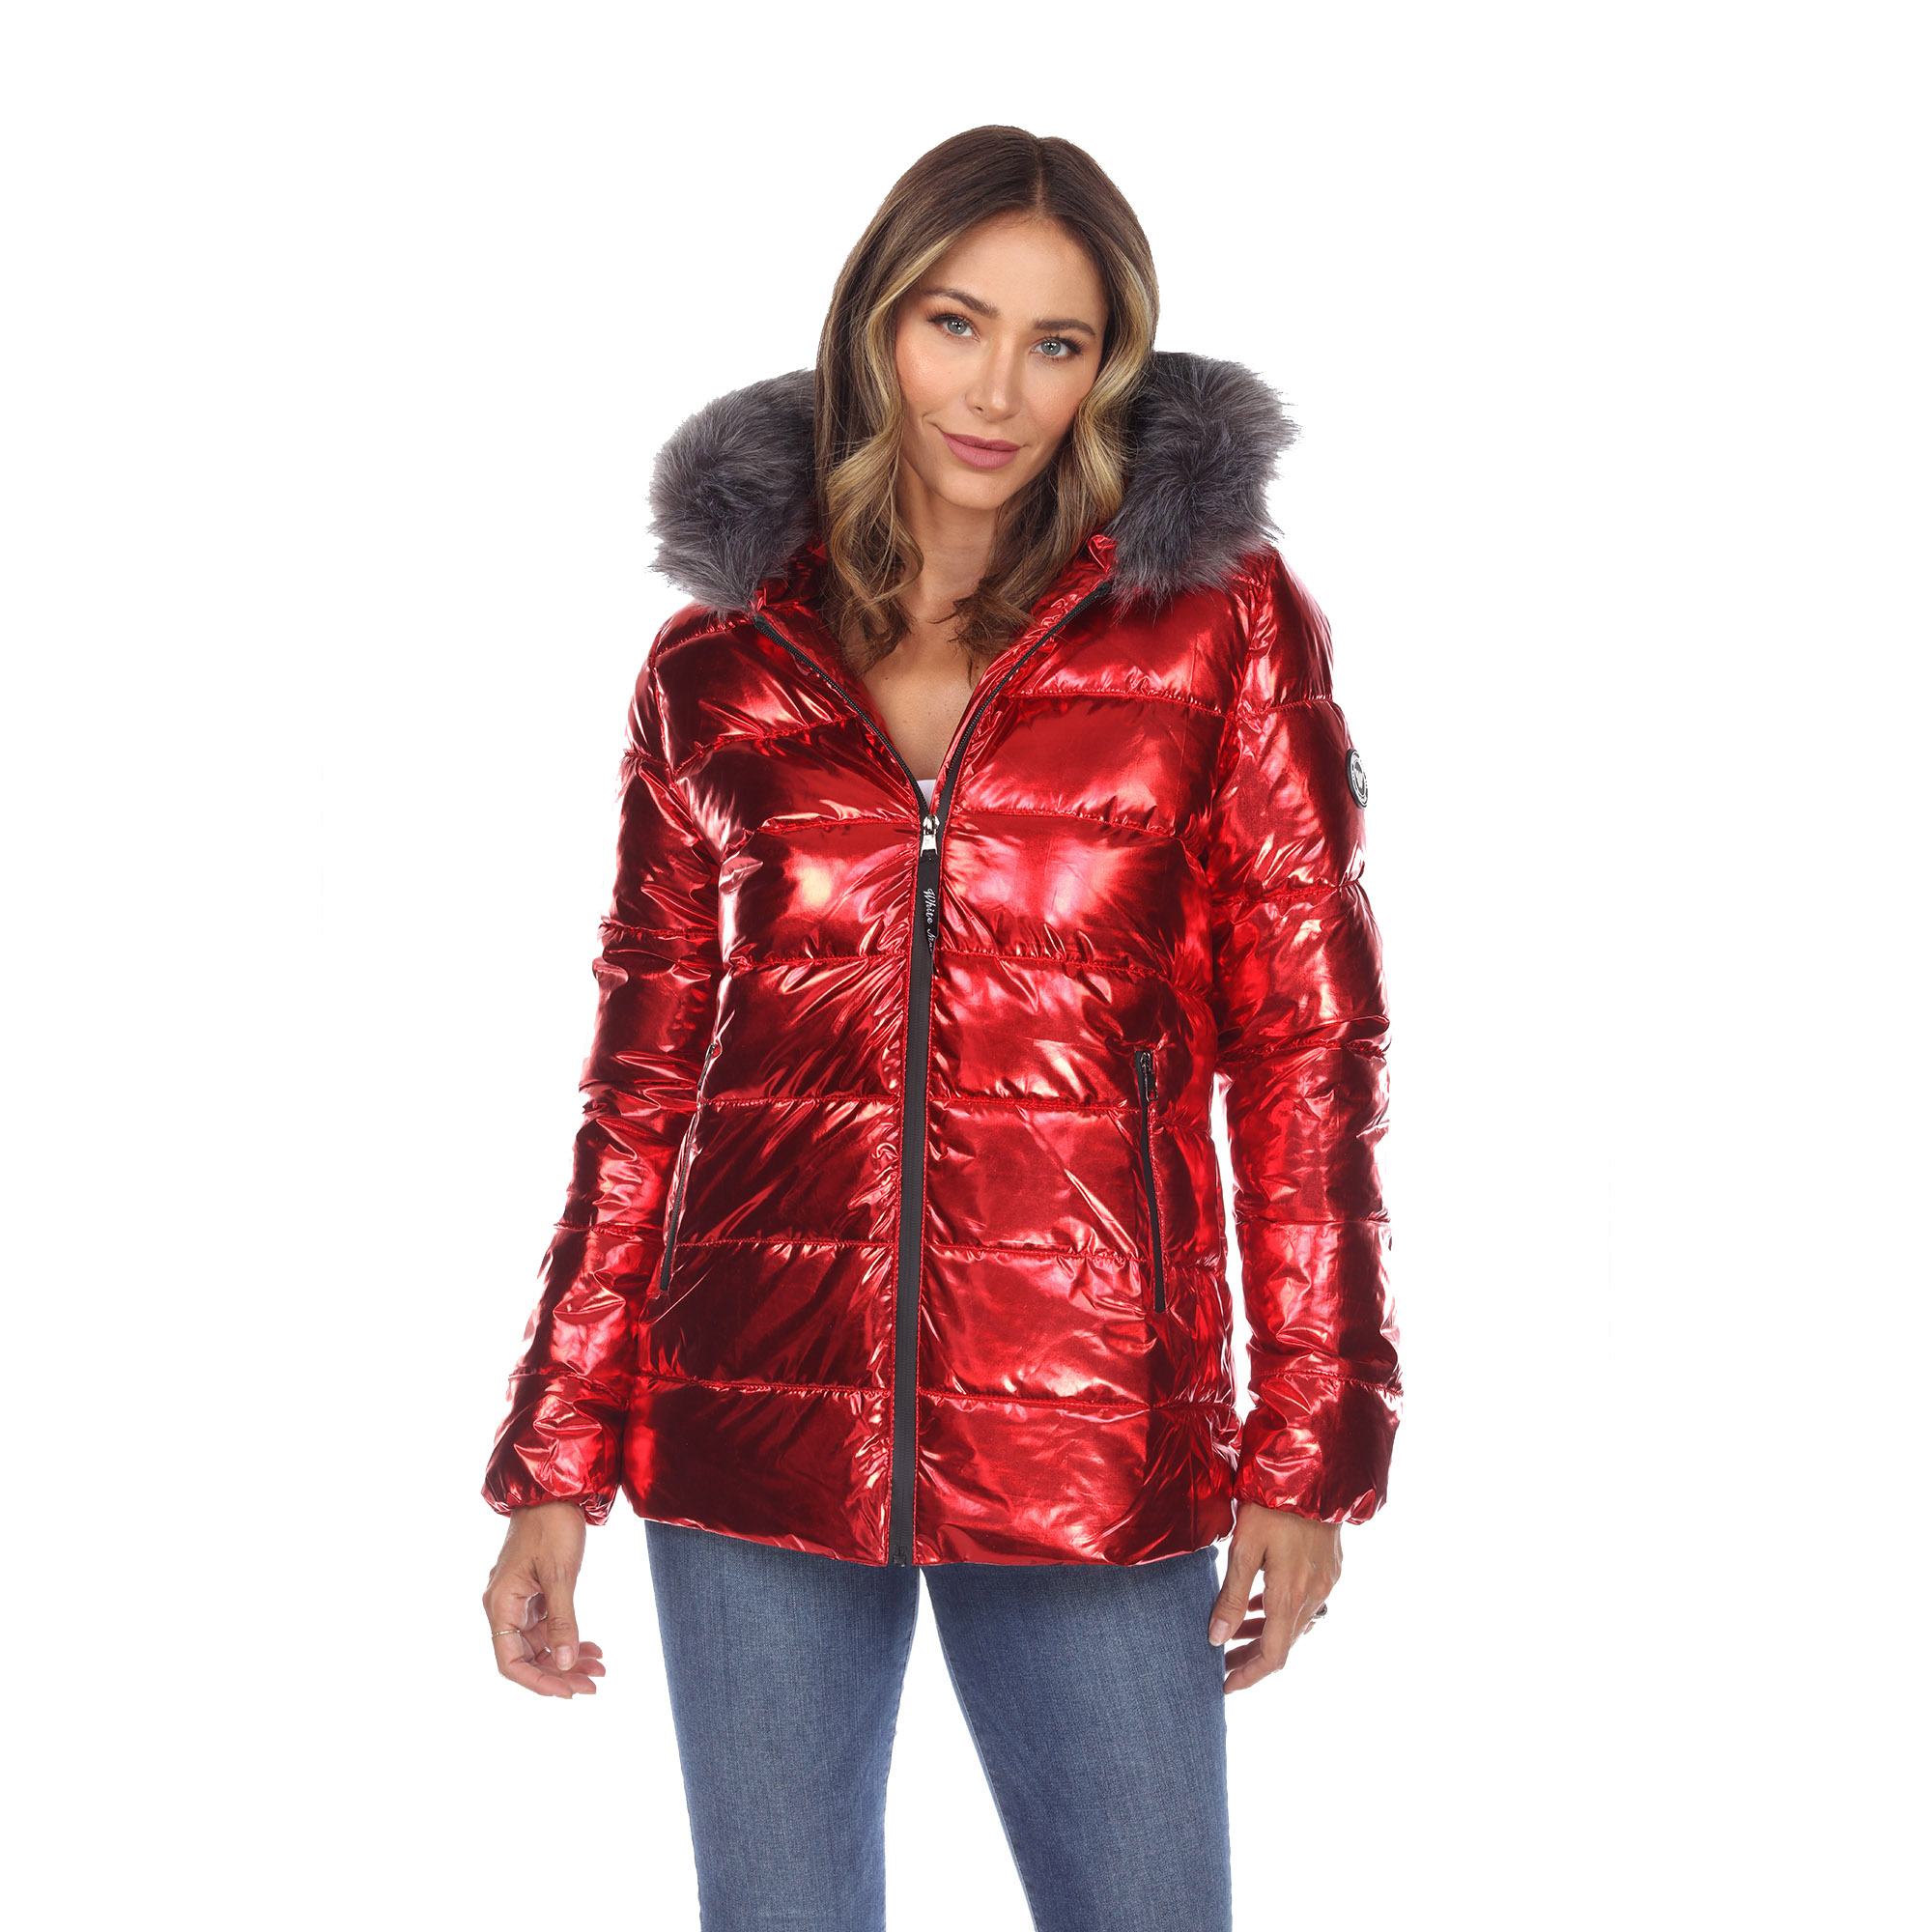 White Mark Womenâs Metallic Puffer Coat With Hoodie - Red, 1X